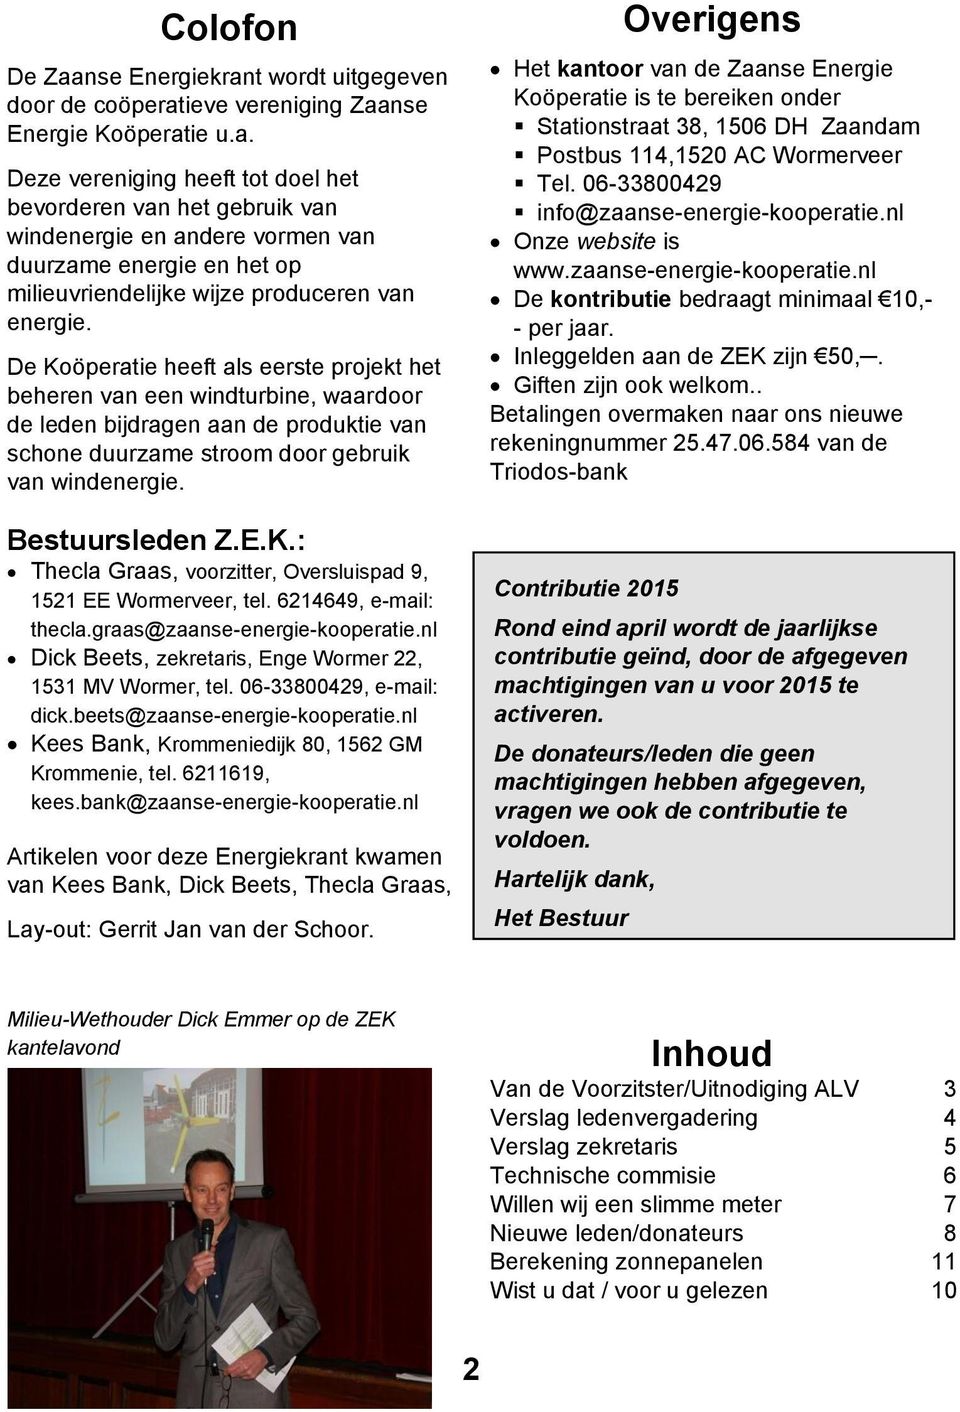 6214649, e-mail: thecla.graas@zaanse-energie-kooperatie.nl Dick Beets, zekretaris, Enge Wormer 22, 1531 MV Wormer, tel. 06-33800429, e-mail: dick.beets@zaanse-energie-kooperatie.